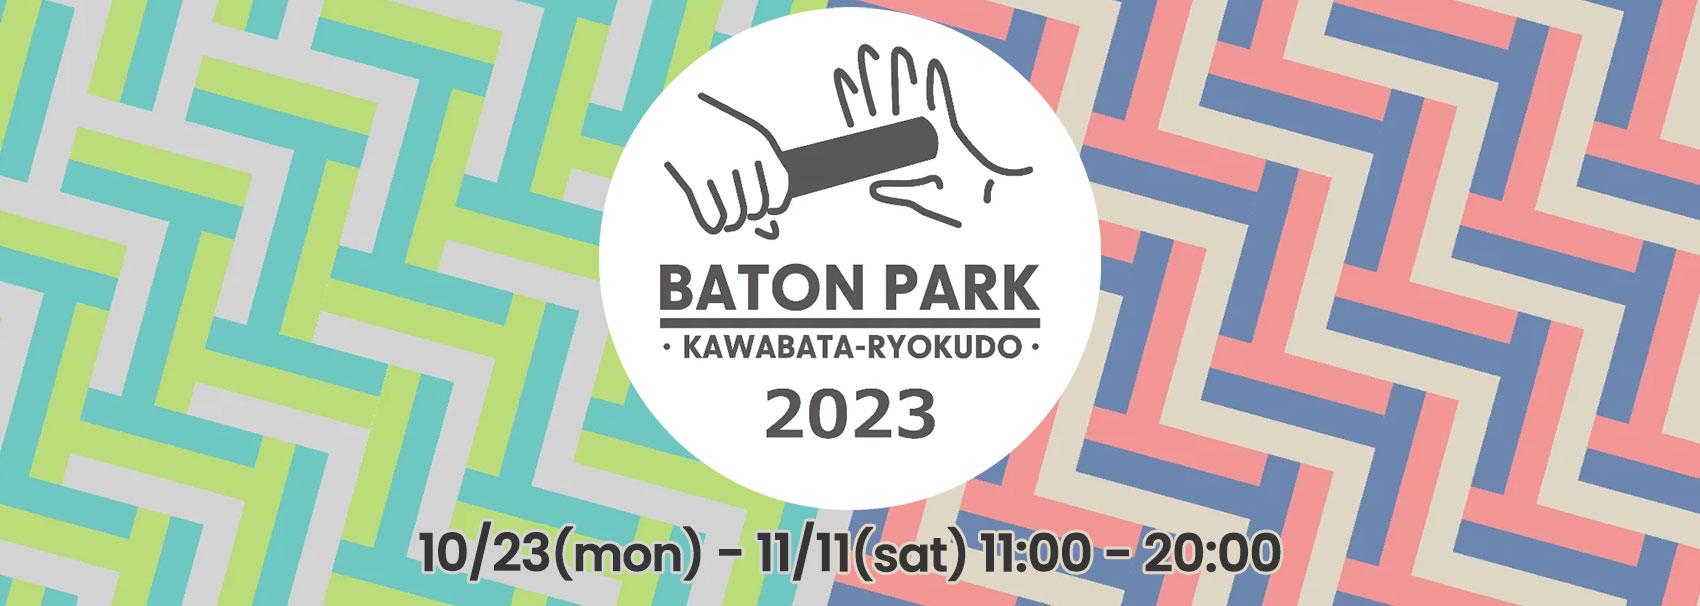 BATON PARK ・KAWABATA-RYOKUDO・バナー画像